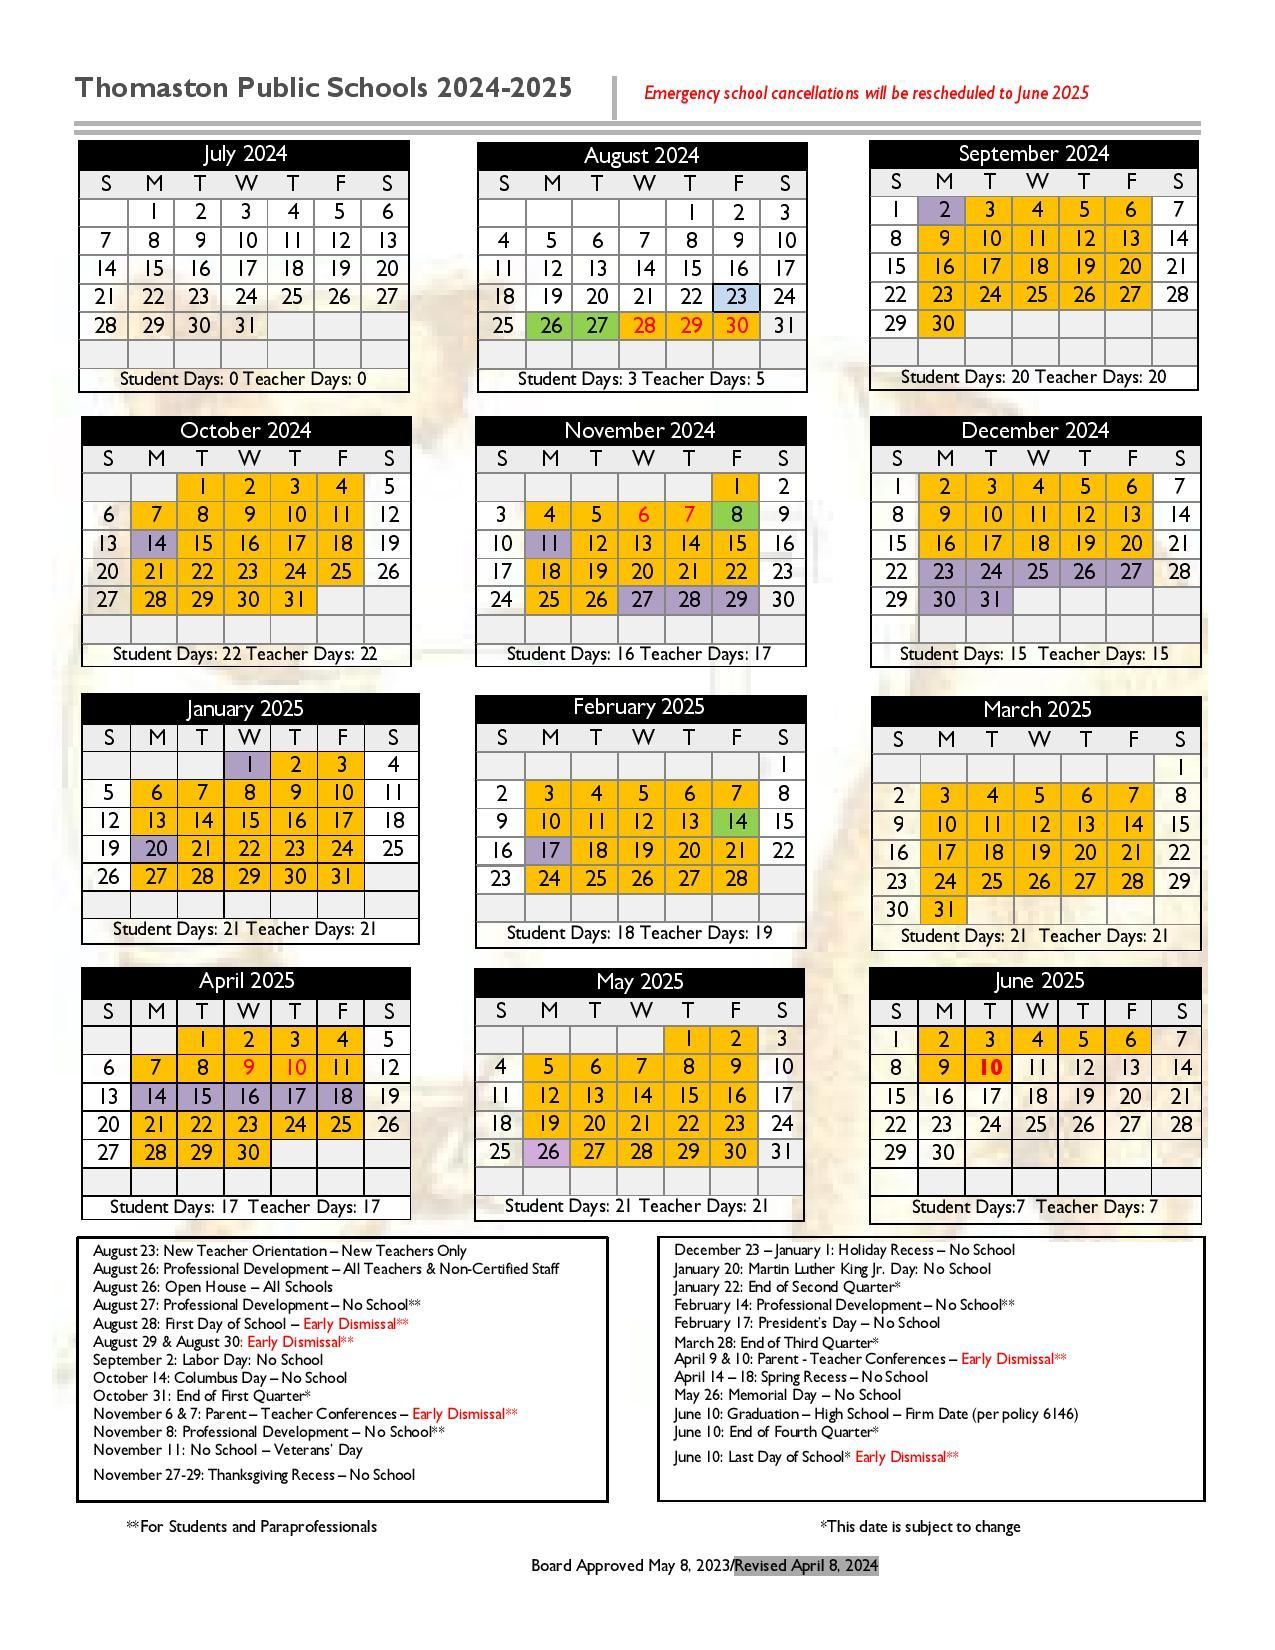 District calendar for Thomaston Public Schools 2024-2025